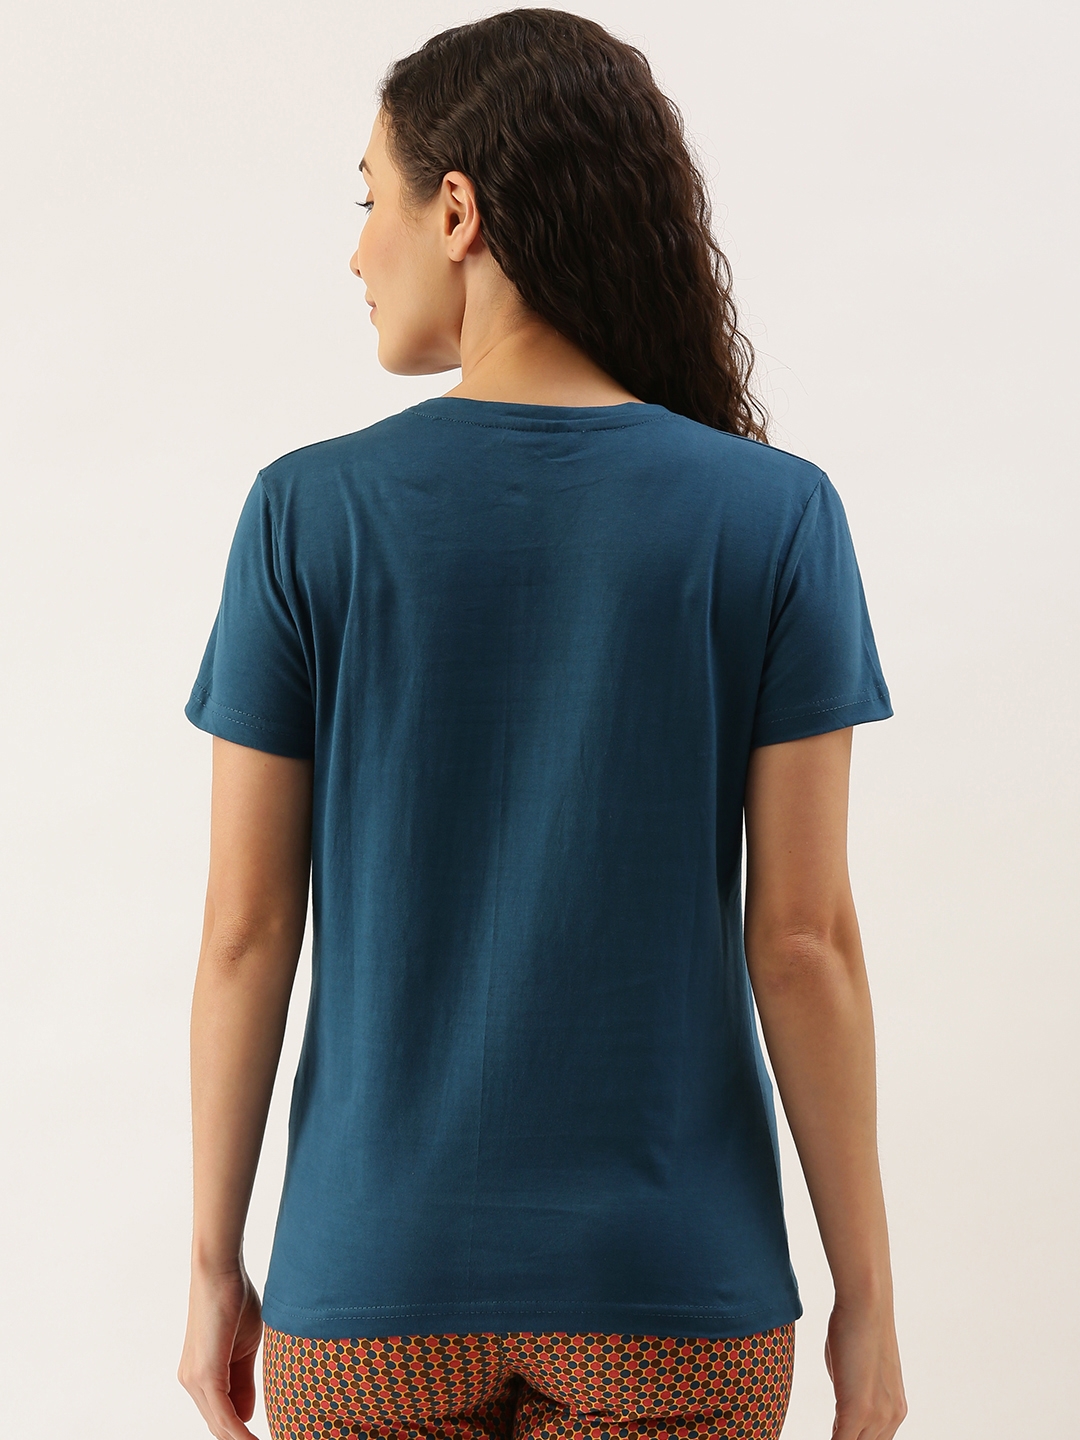 Kryptic | Women's Grey Cotton Printed T-Shirts 5